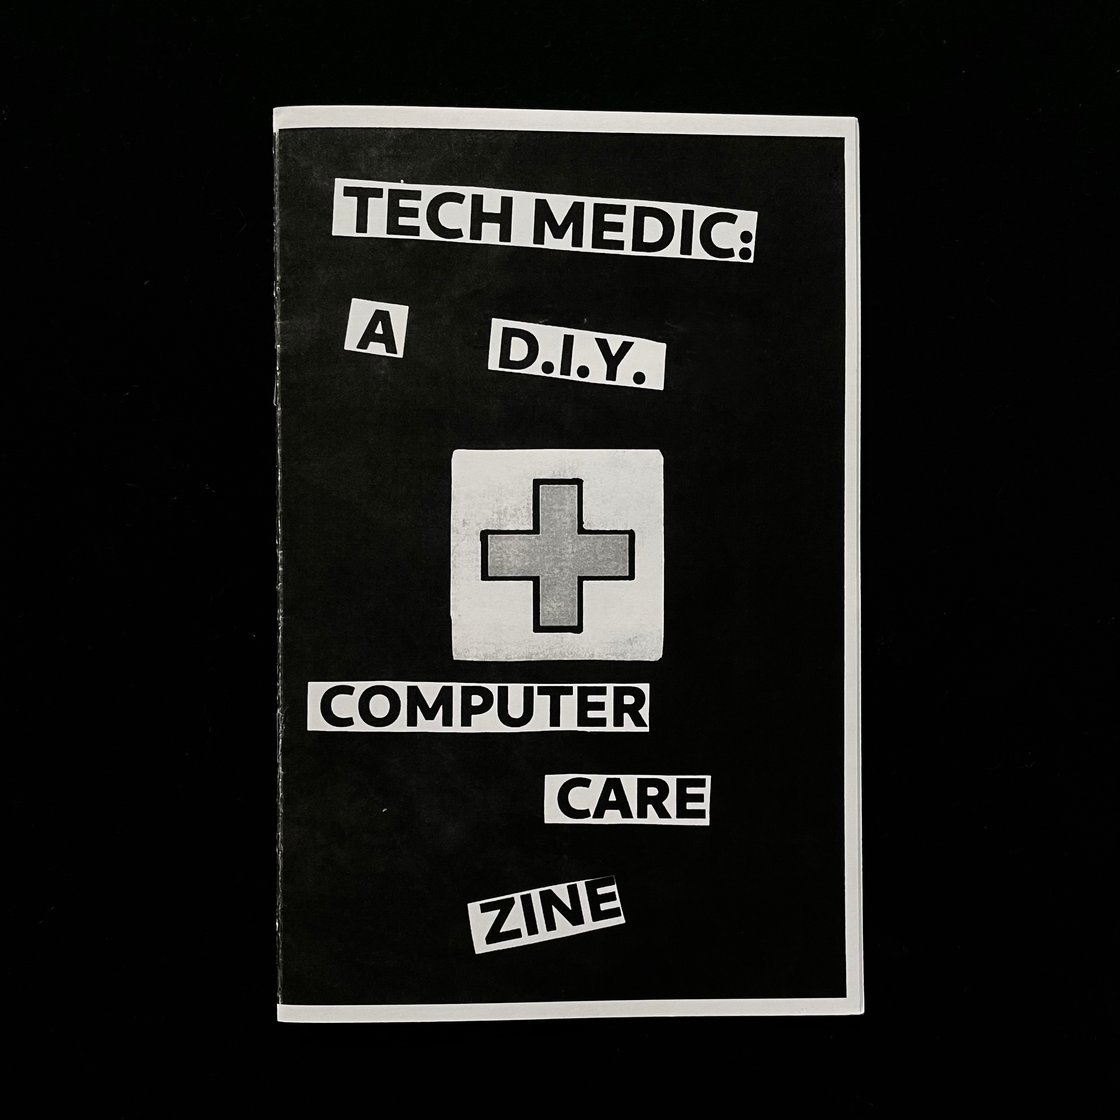 Image of Tech Medic